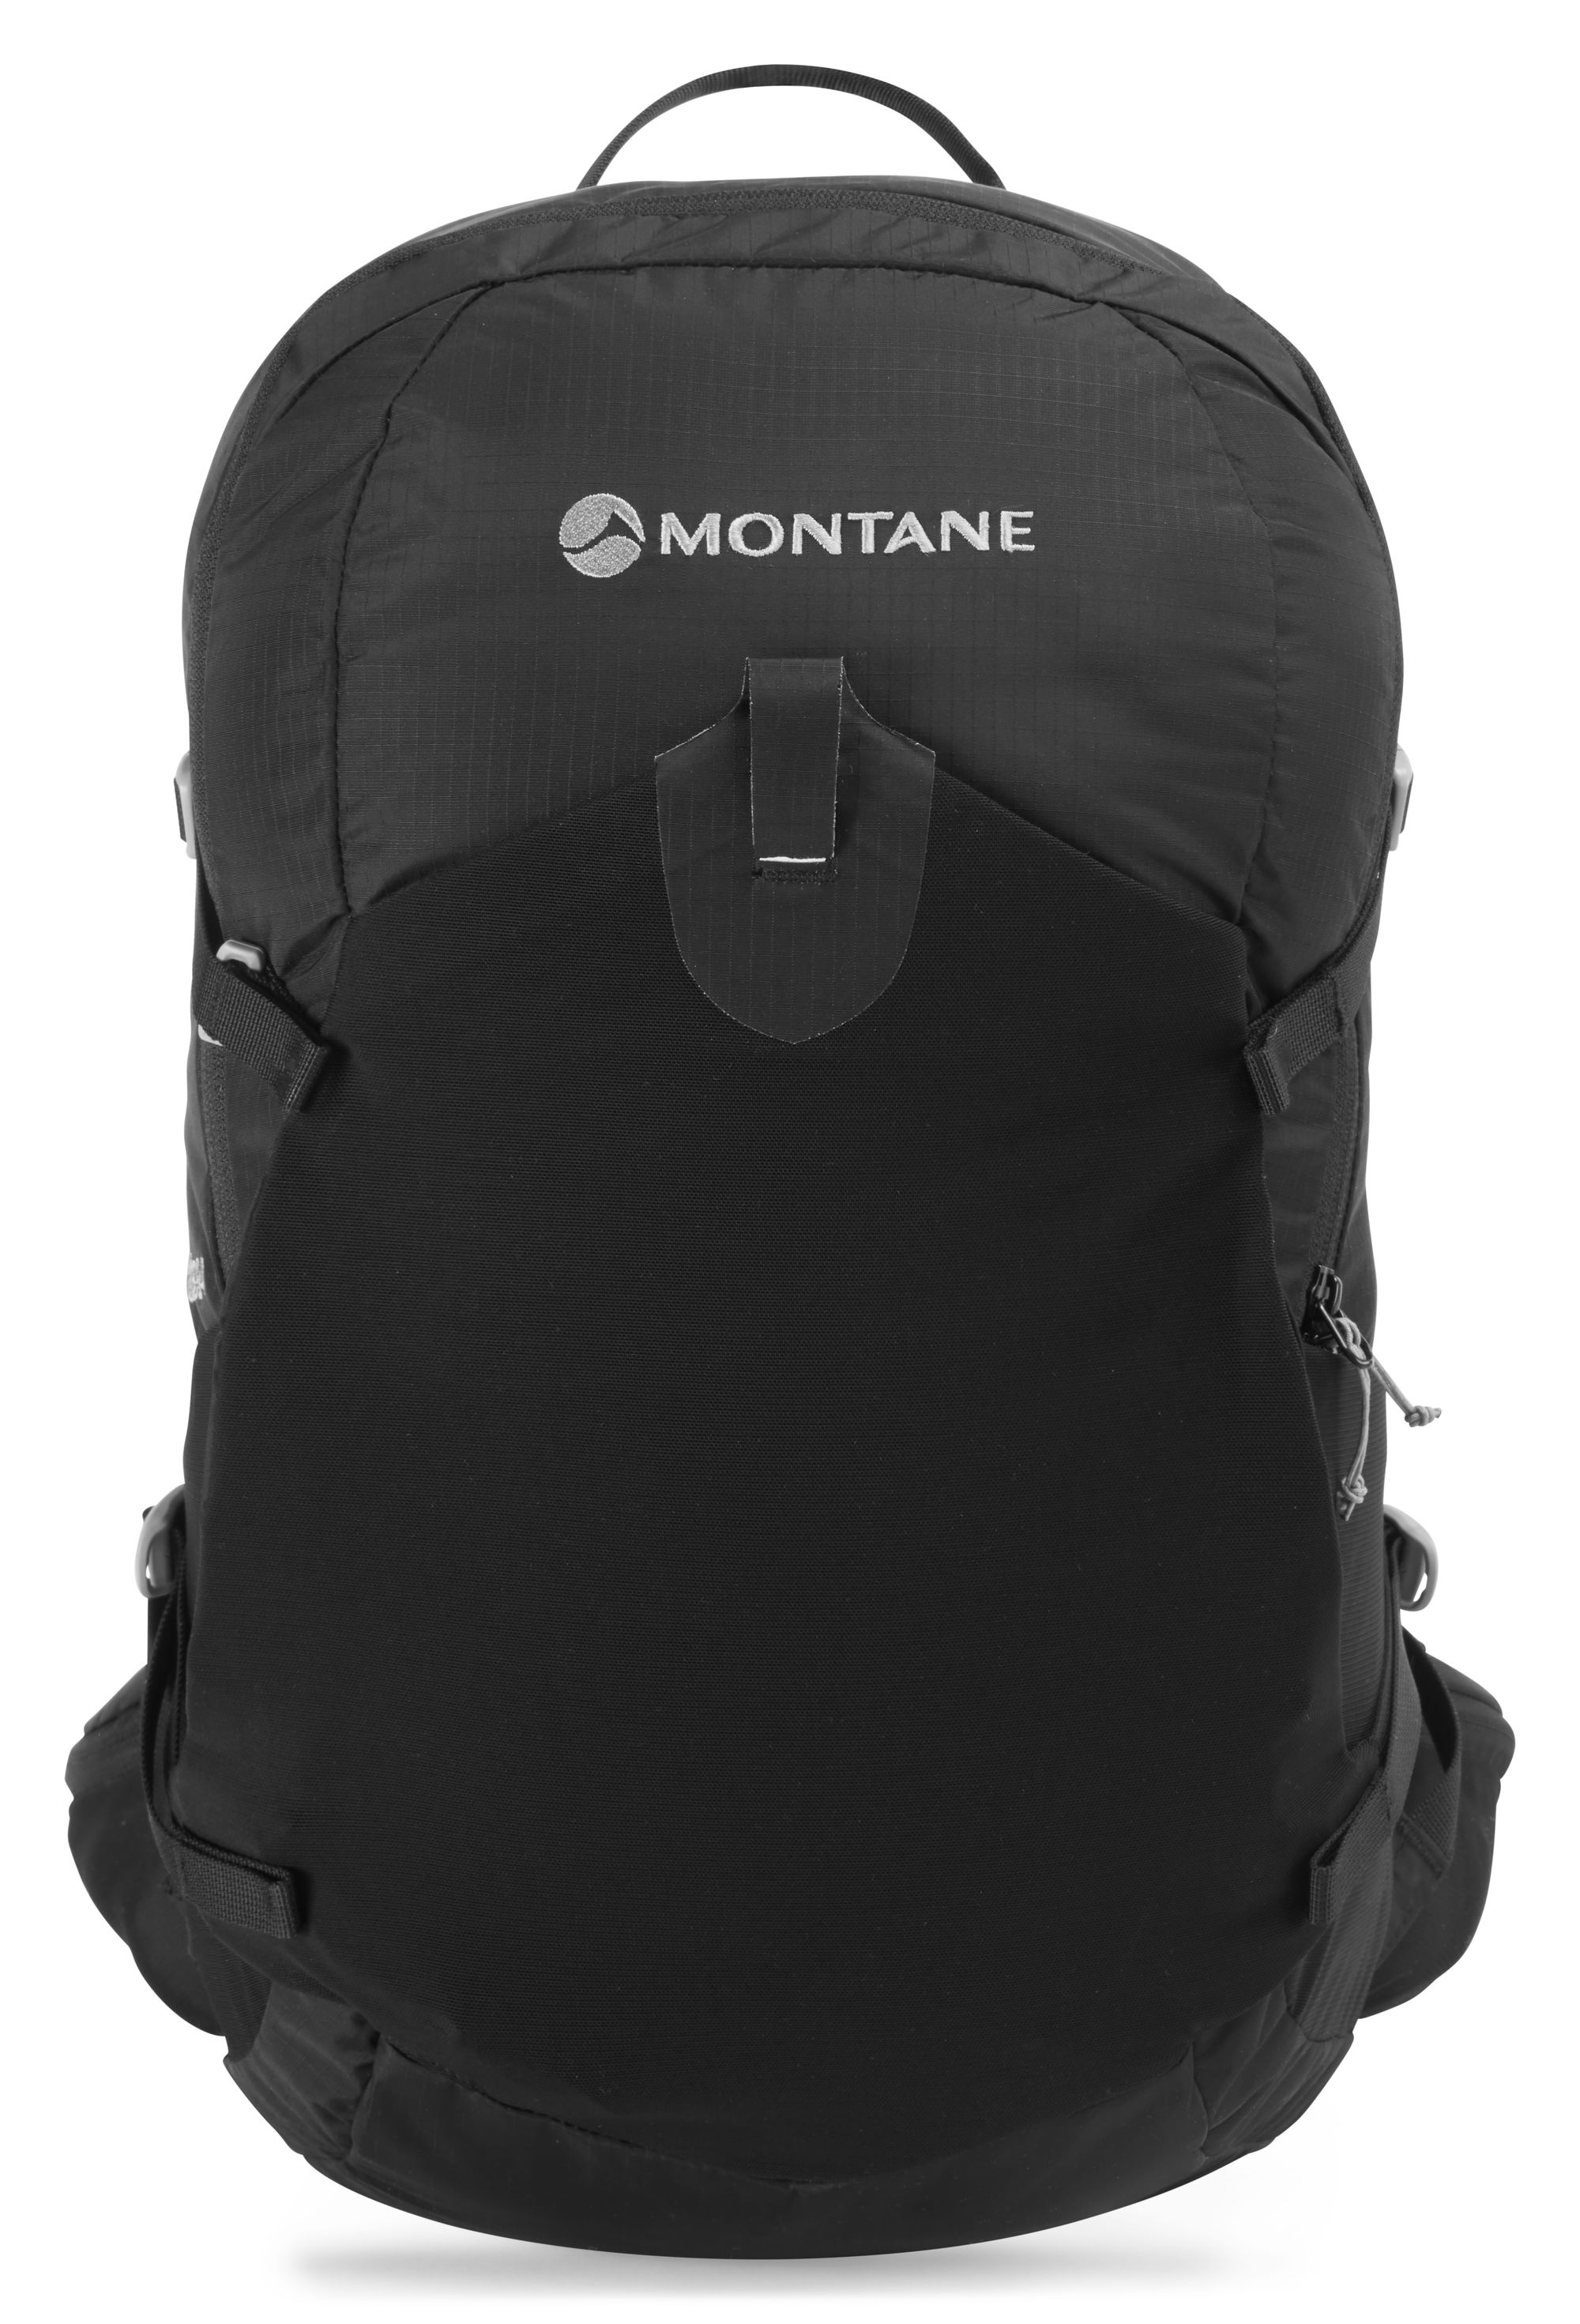 Montane FEM AZOTE 24-BLACK-ONE SIZE / ADJUST batoh černý